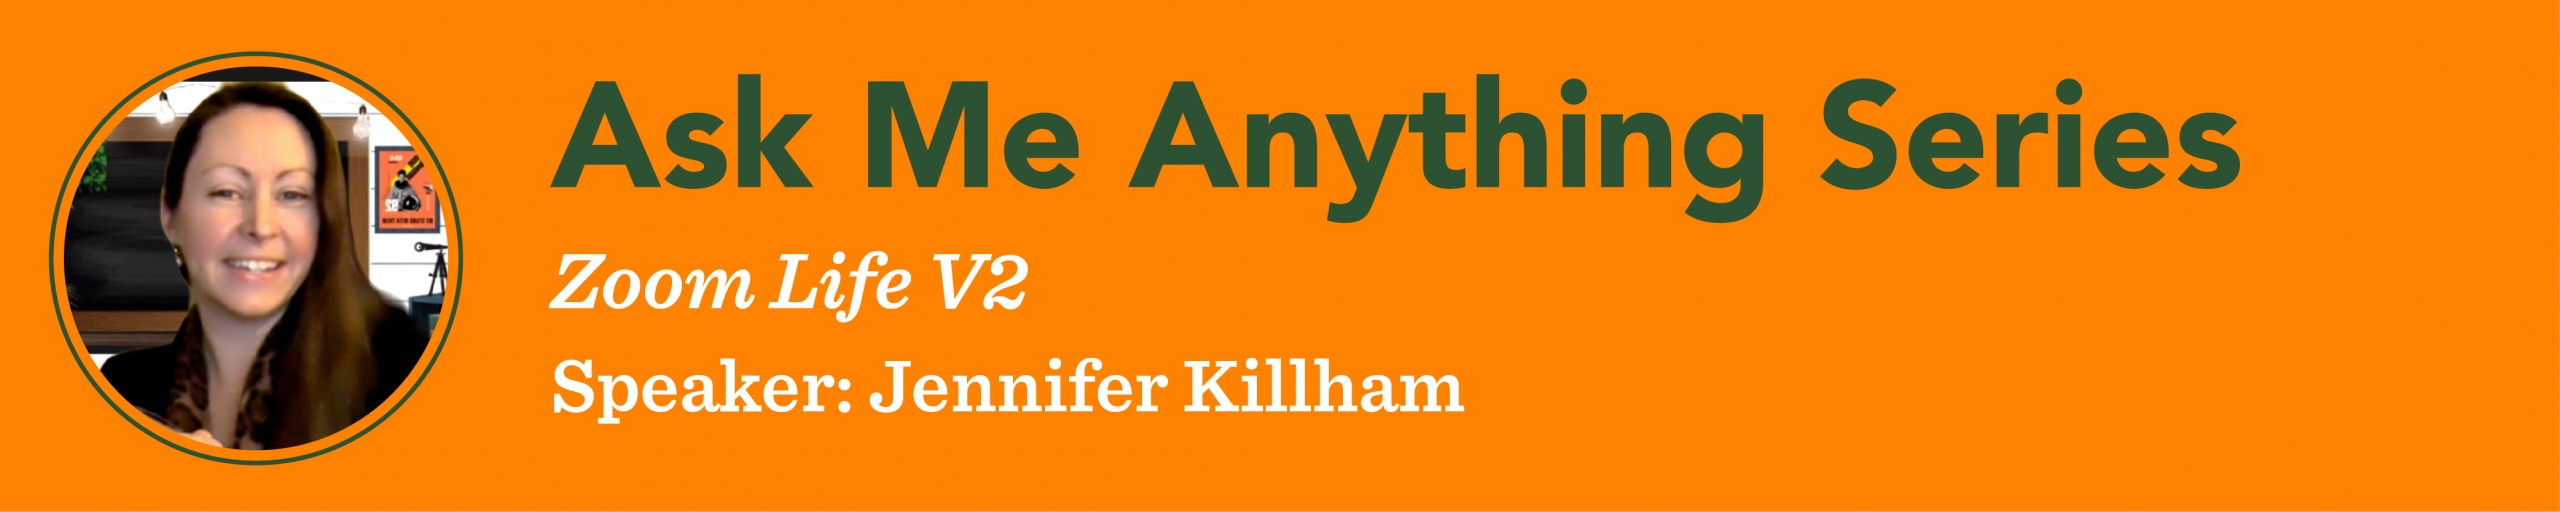 Killham Event Banner 1200x200